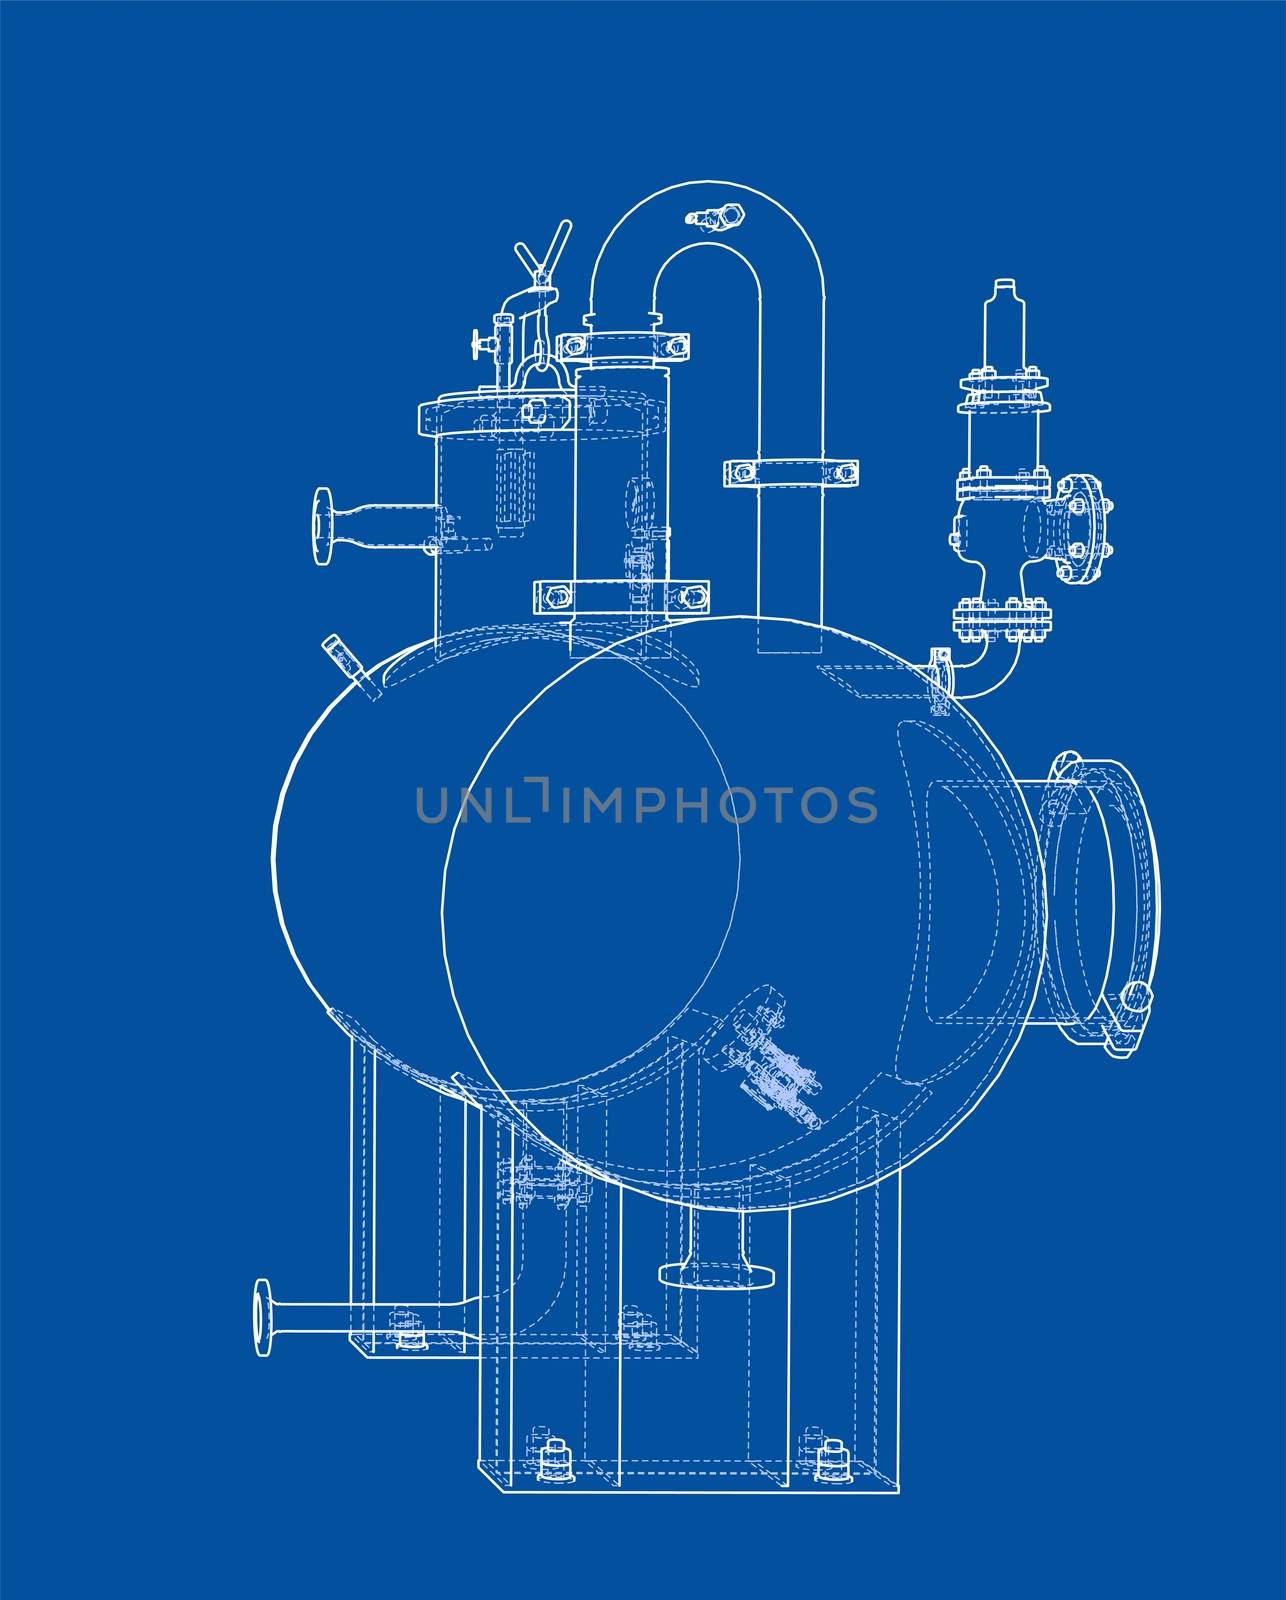 Sketch or blueprint industrial equipment. 3d illustration